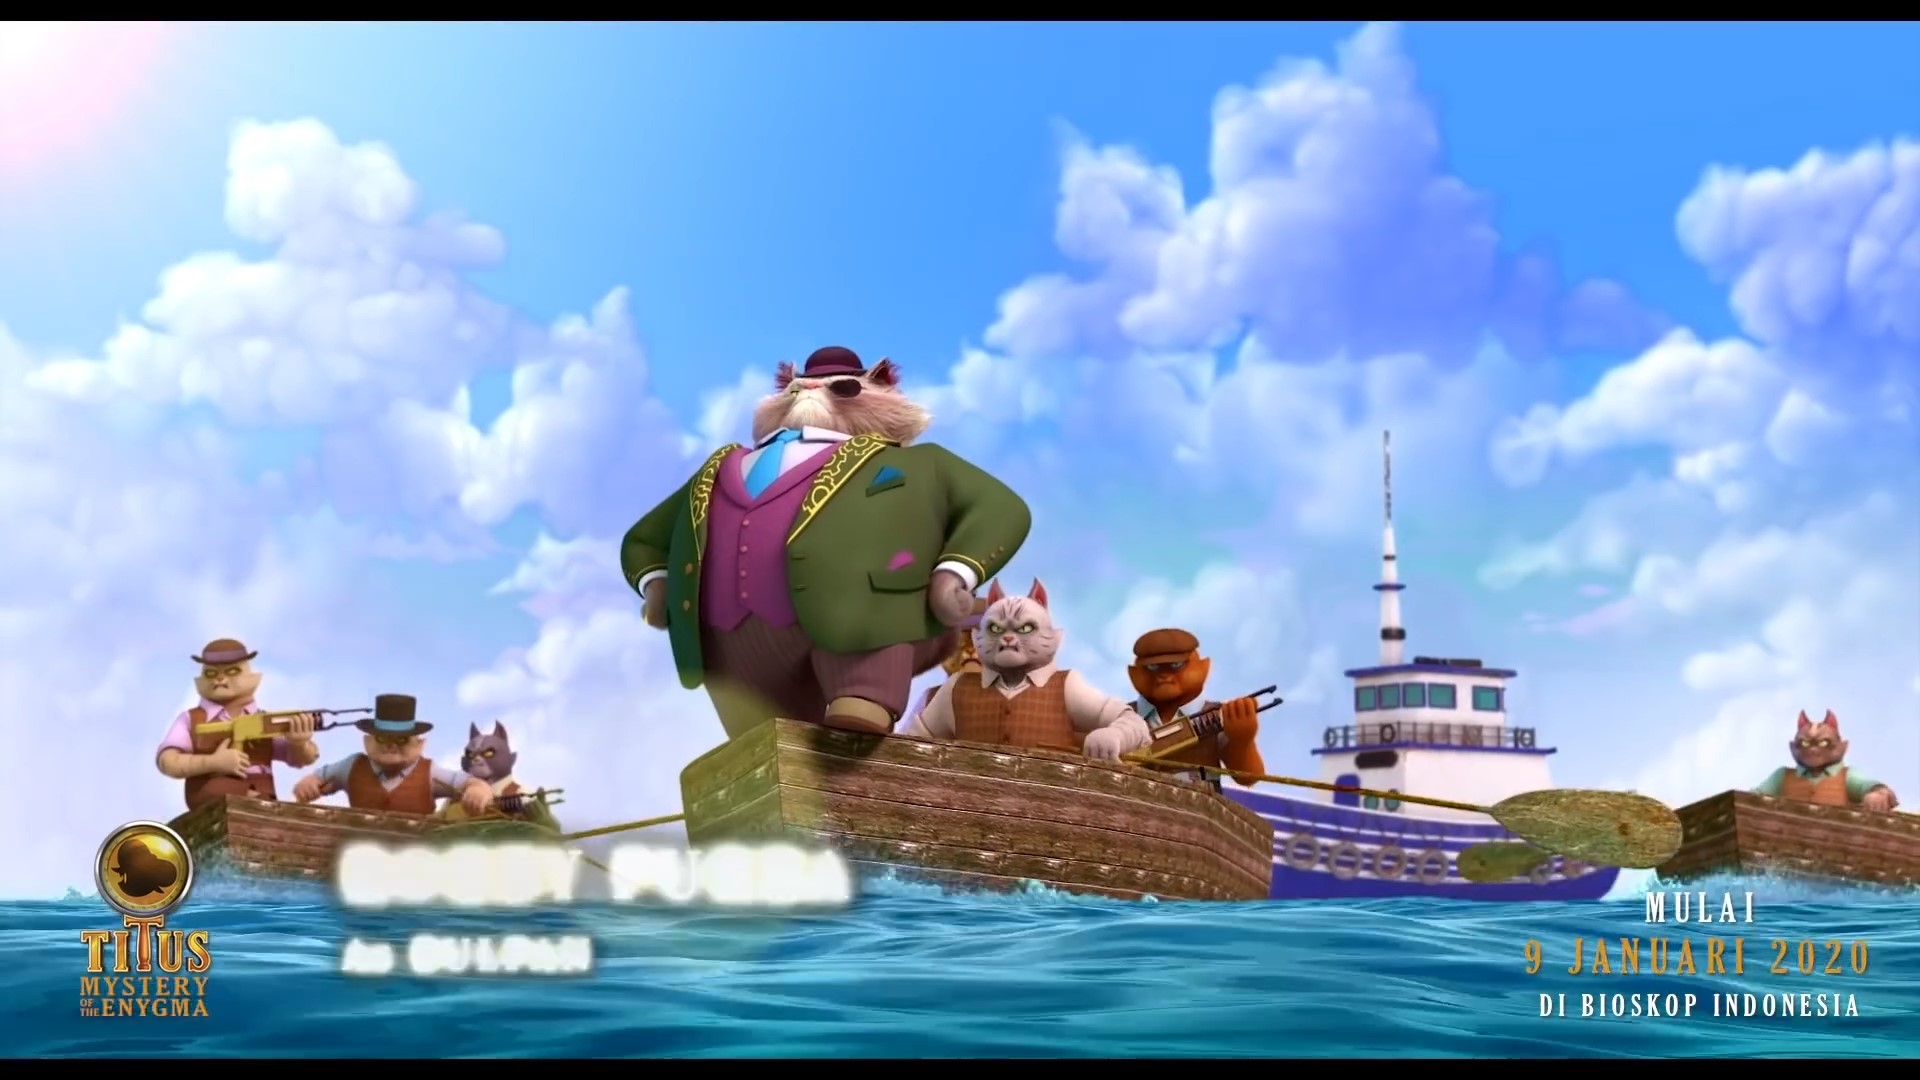 Gambar Bulpan berdiri dengan gagahnya diatas perahu